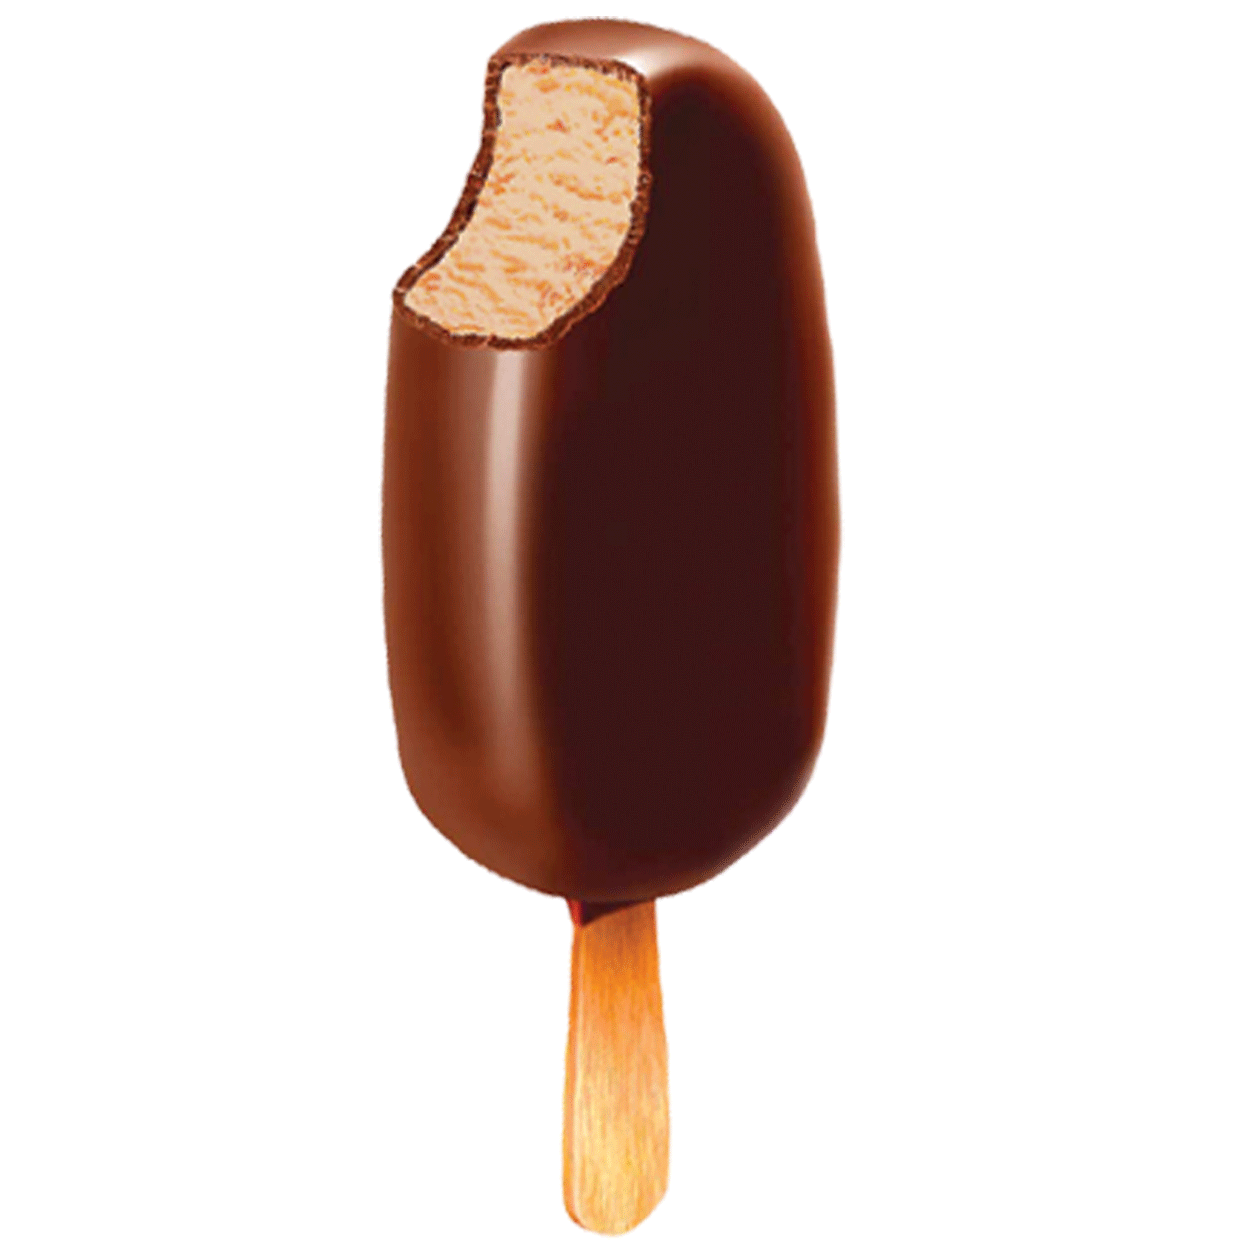 Ettore Gelato - Hazelnut and Chocolate Gelato Stick